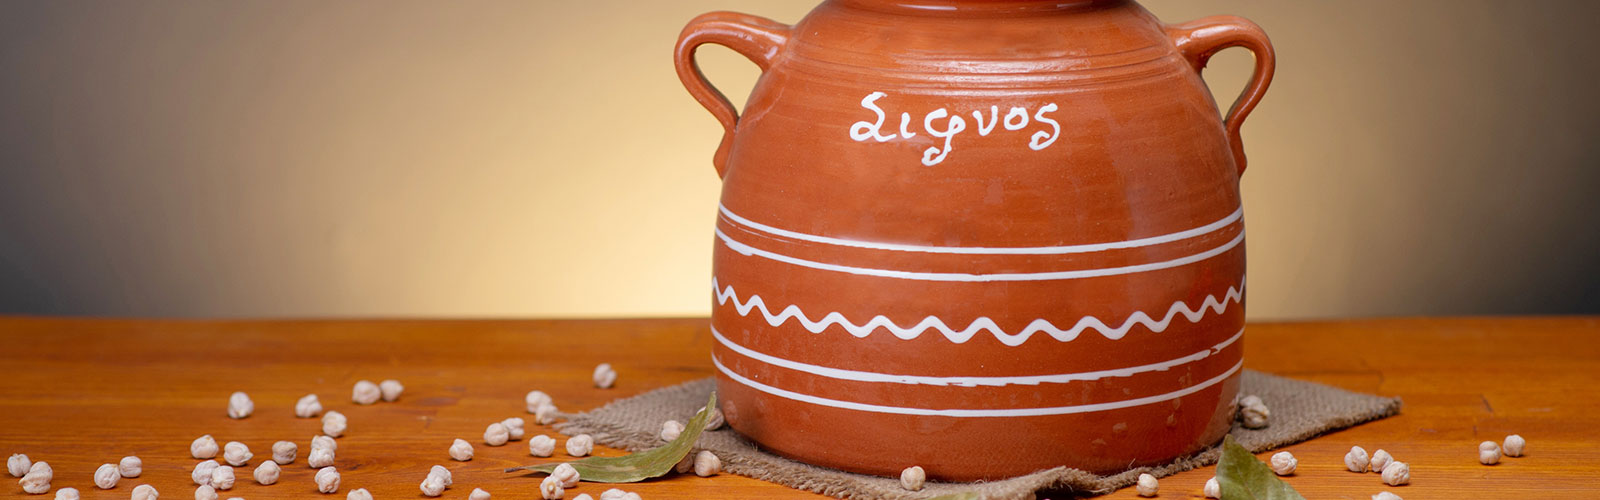 Apostolidis handmade ceramics